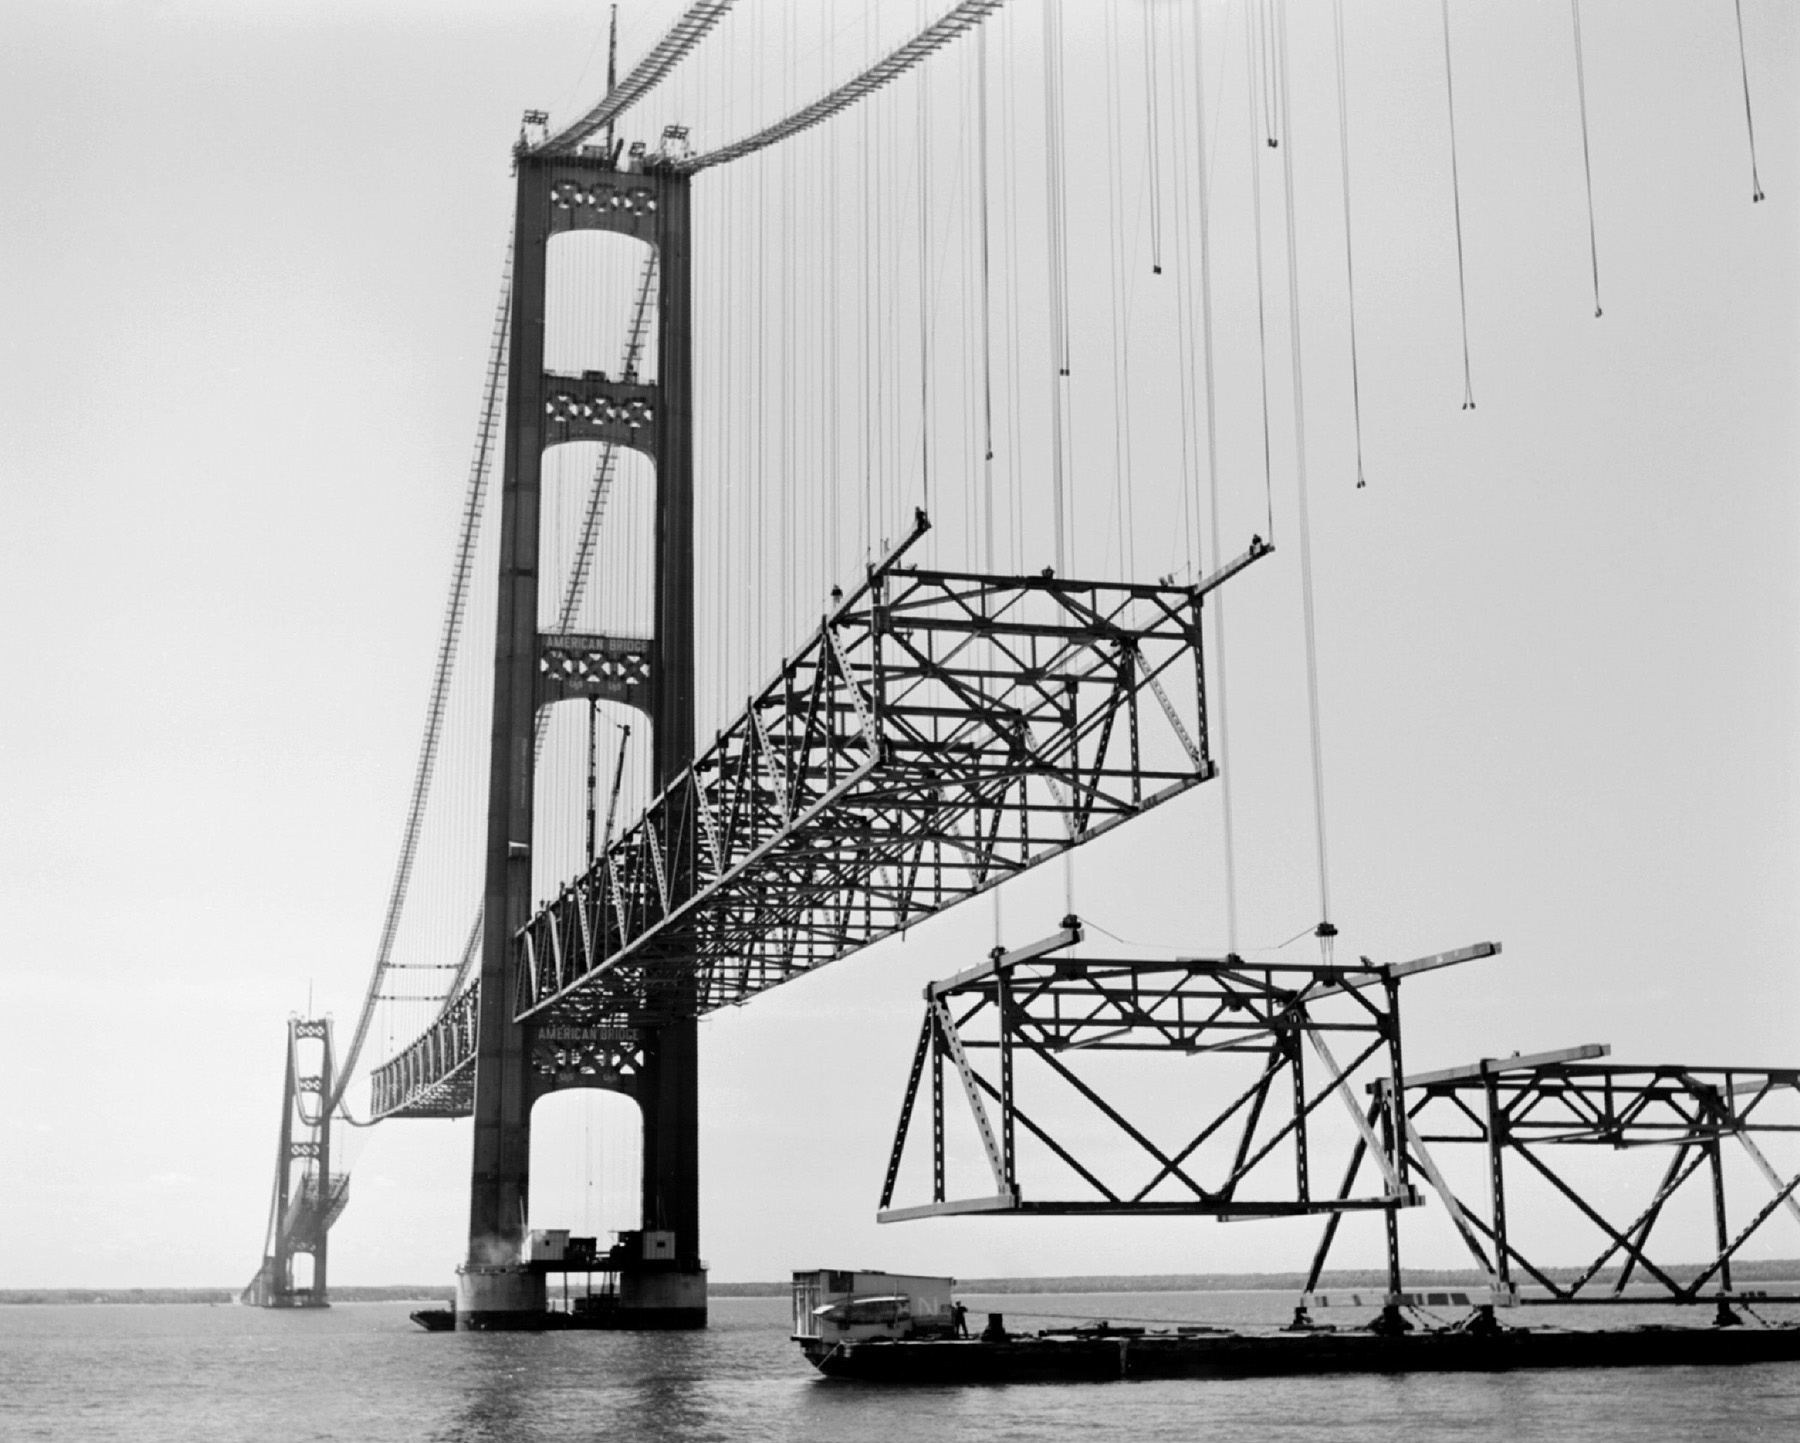 construction of a steel suspension bridge over water